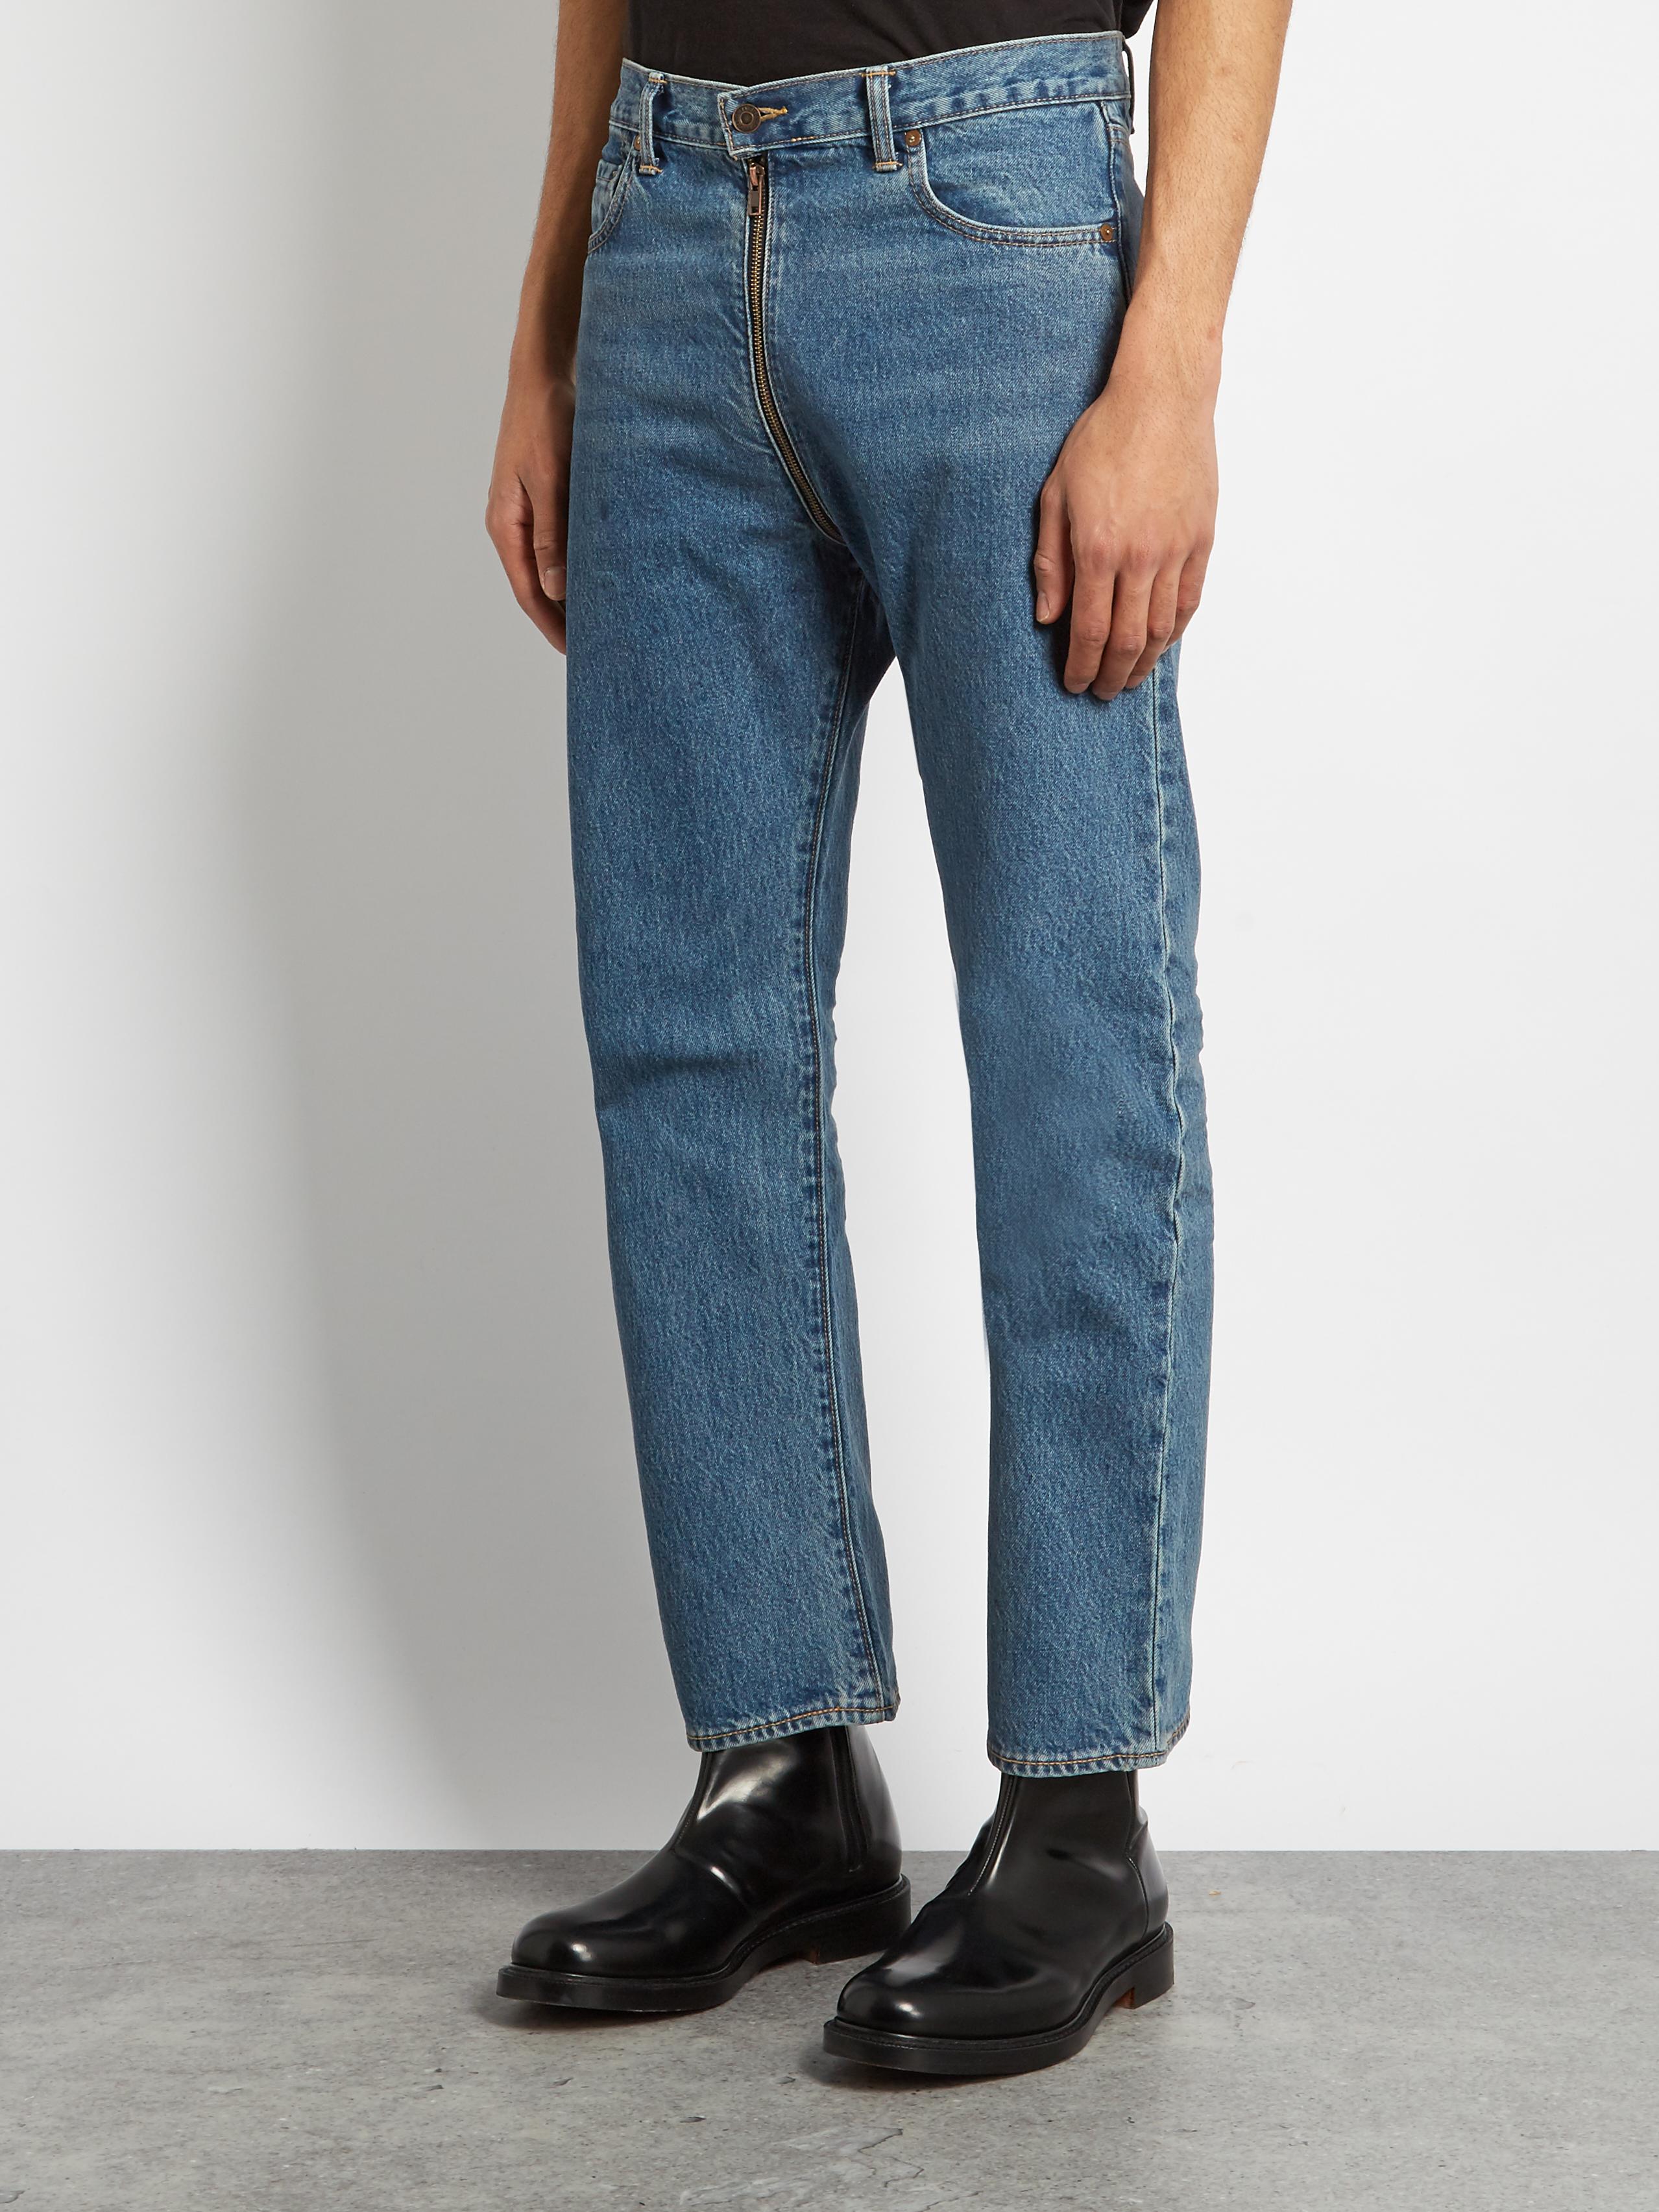 Lyst - Vetements X Levi's Zip-through Jeans in Blue for Men